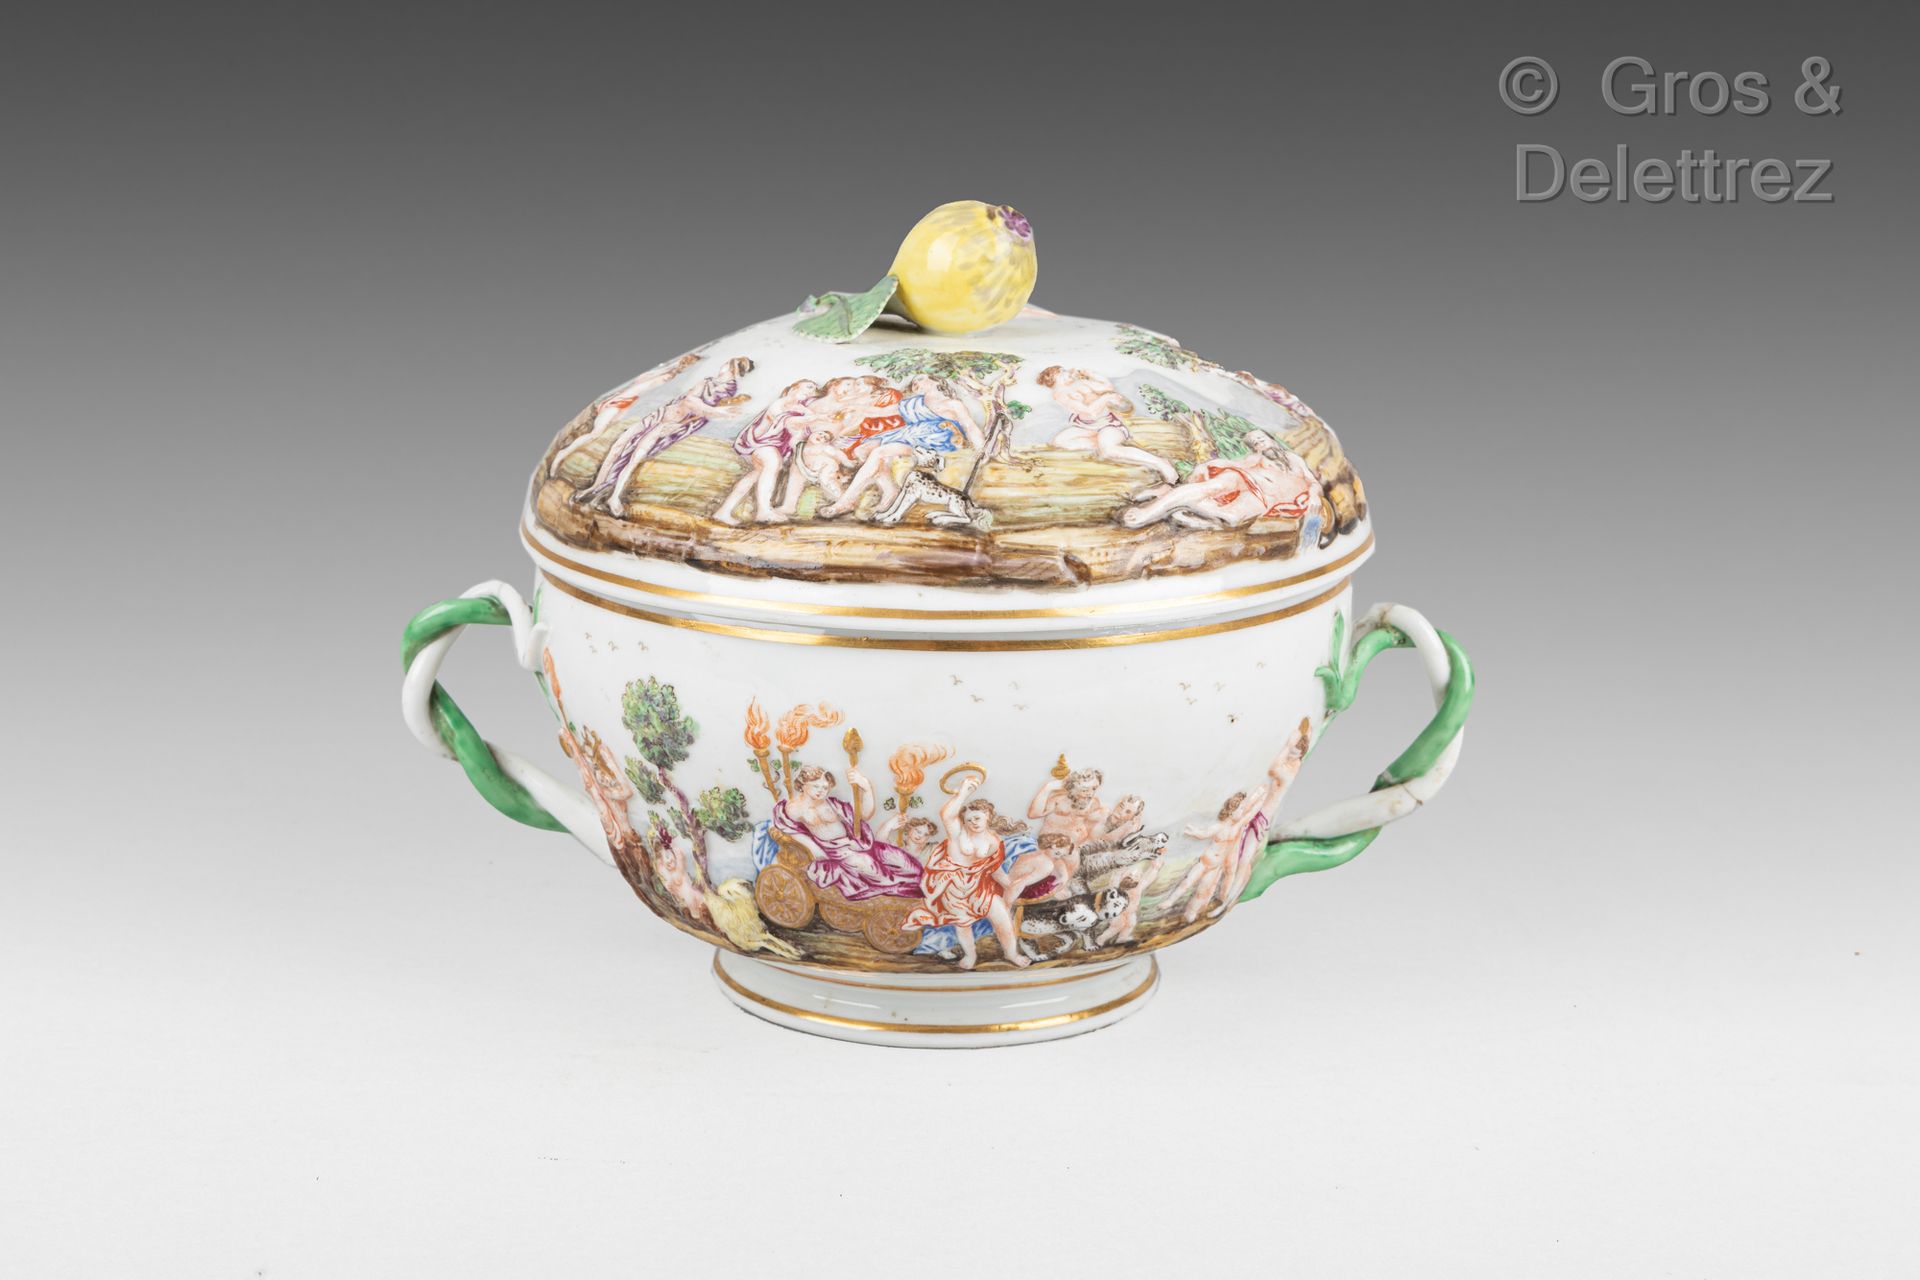 Null DOCCIA, siglo XIX

Caja de porcelana de estilo del siglo XVIII, con las asa&hellip;